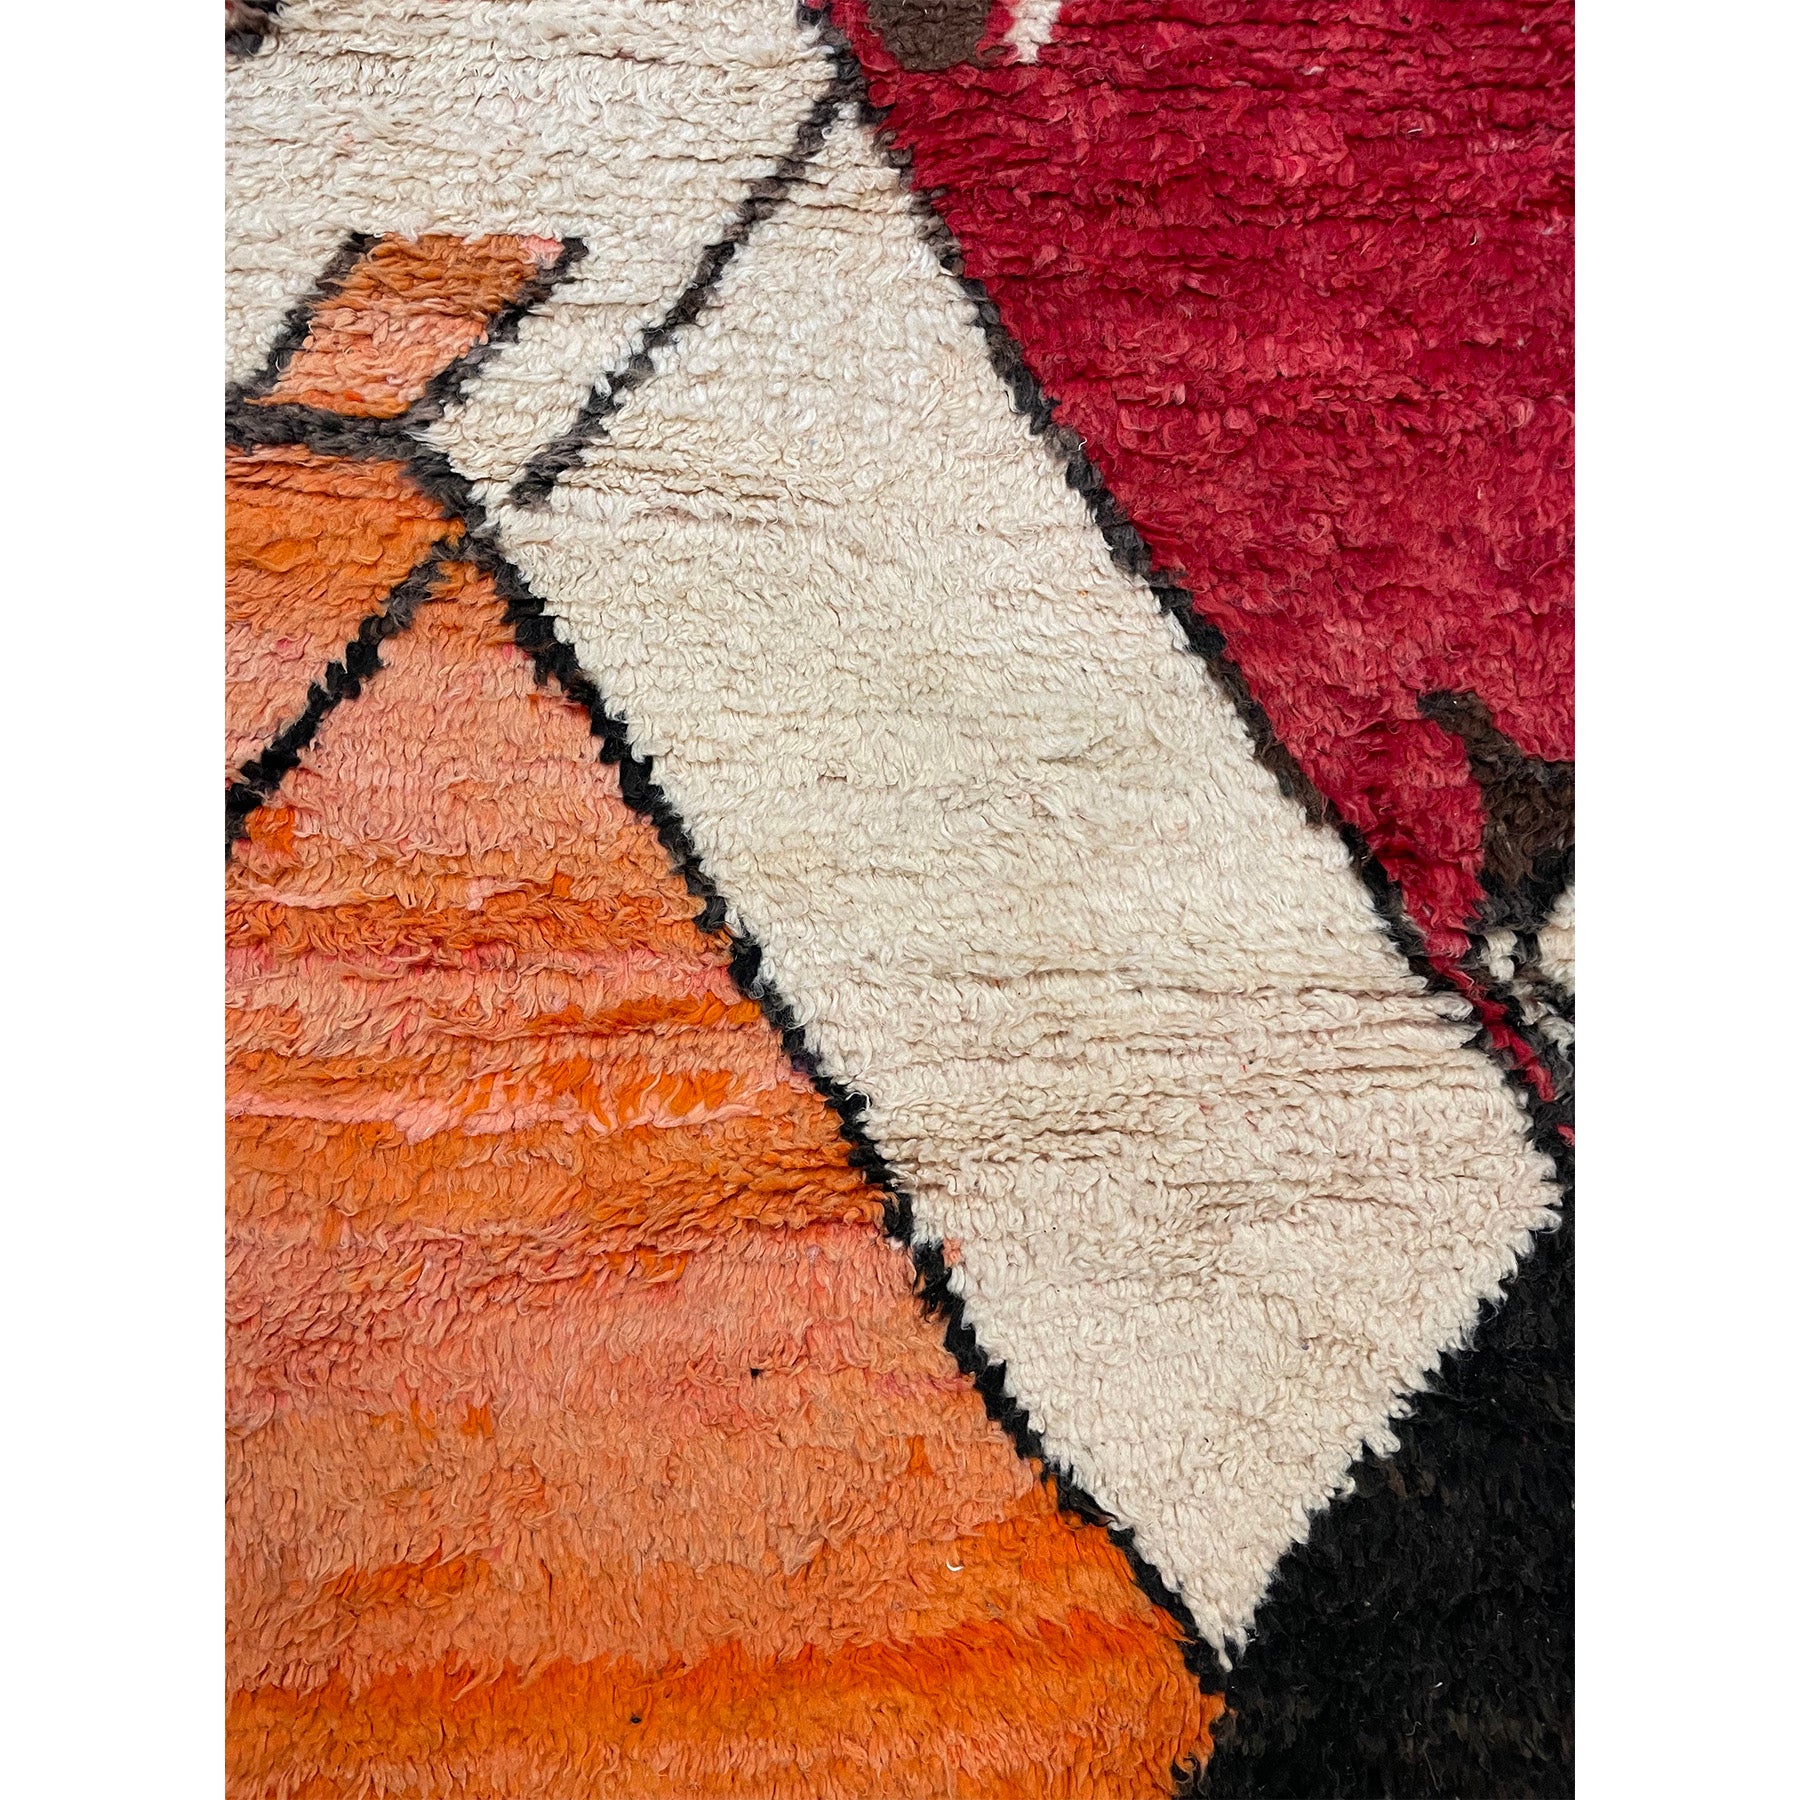 Handwoven wool Moroccan rug in red, orange, and brown - Kantara | Moroccan Rugs